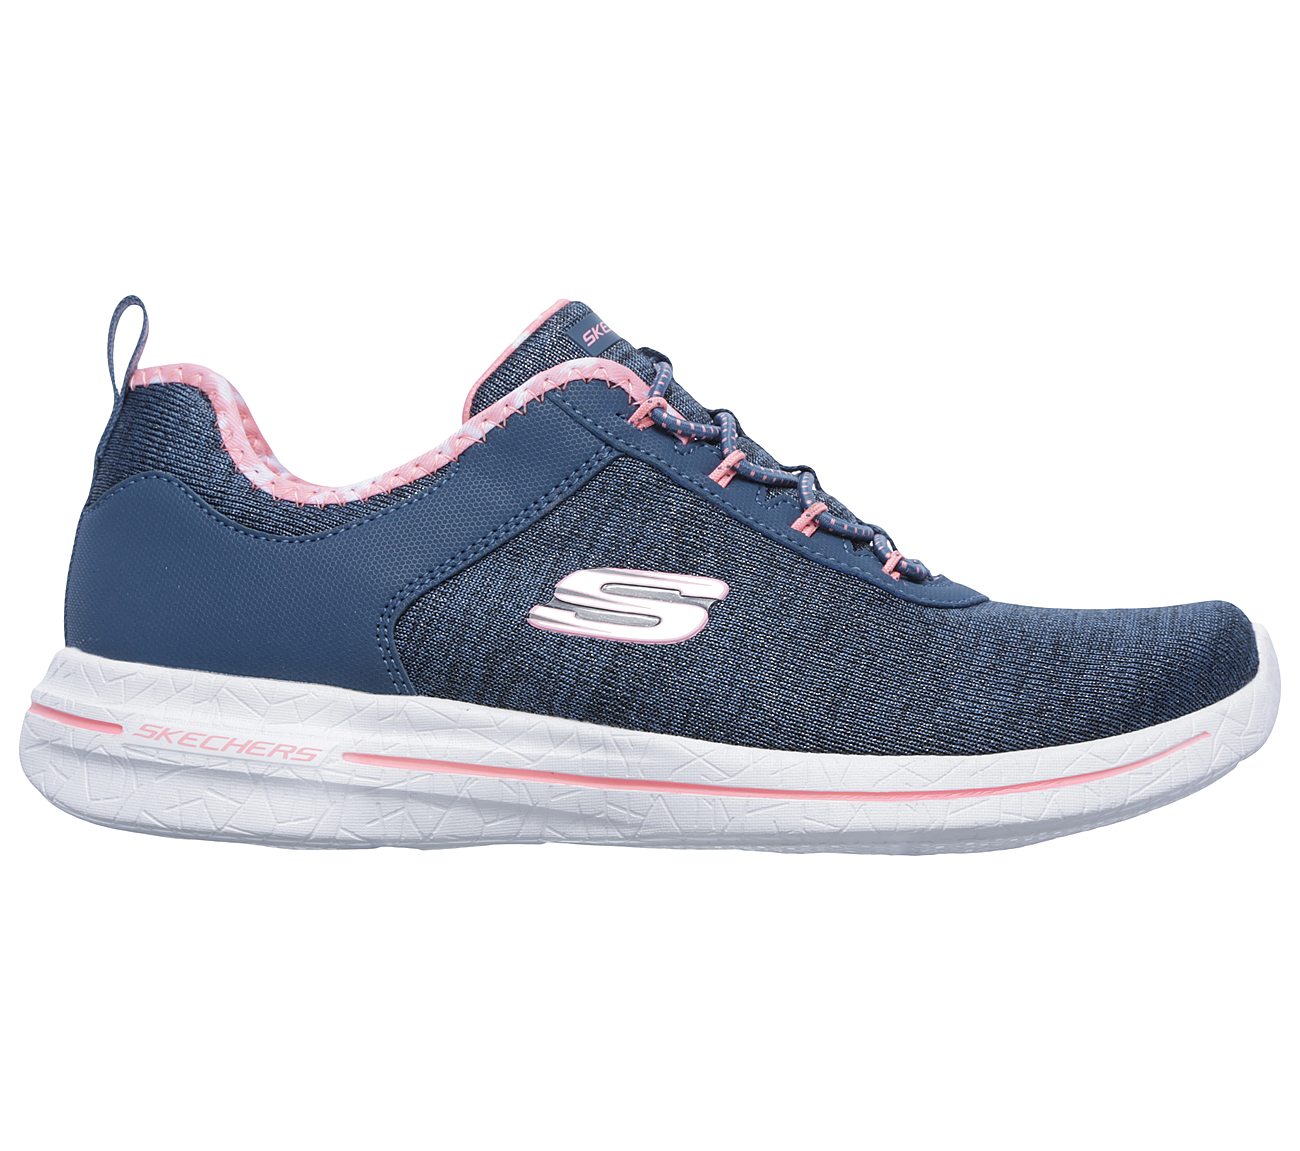 Buy SKECHERS BURST 2.0 Sport Shoes